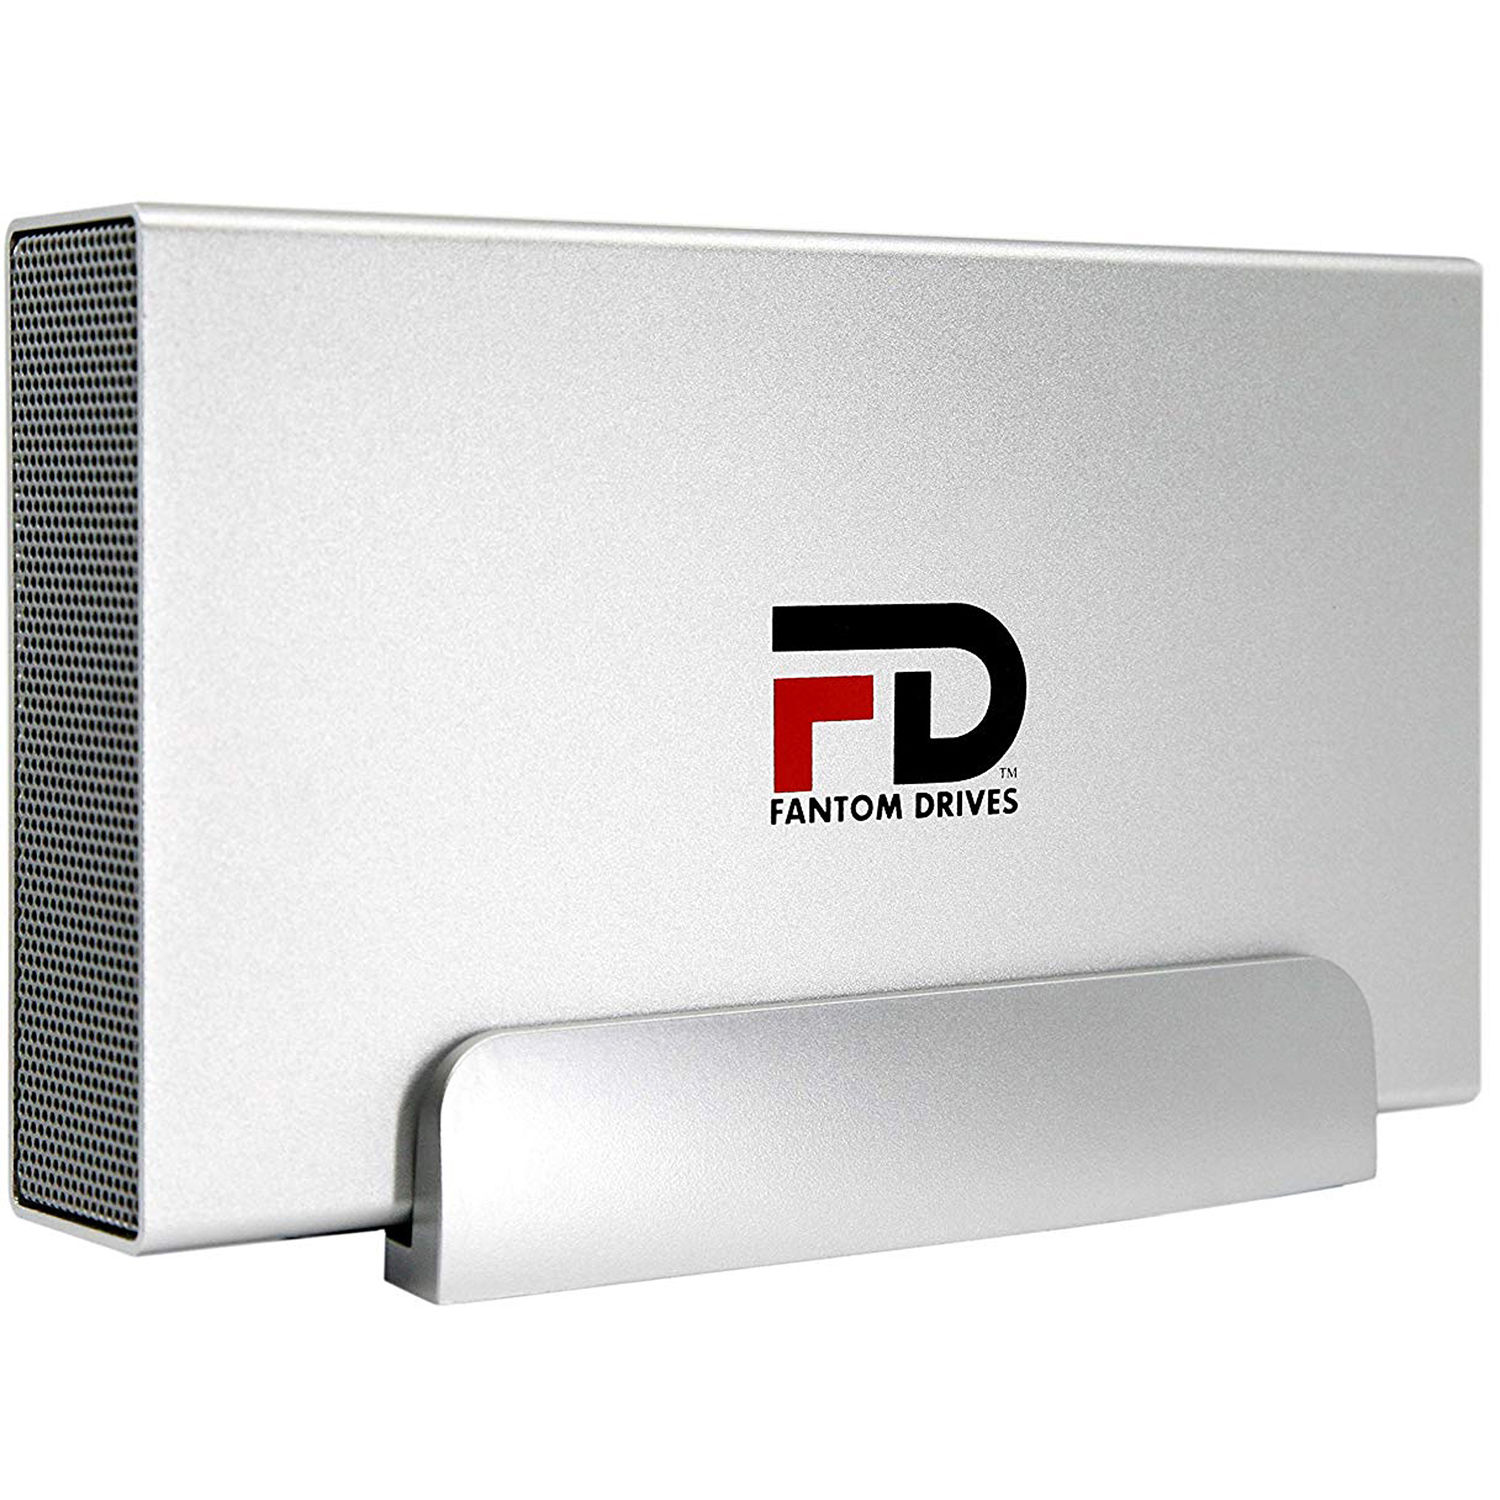 Fantom 4TB G-Force3 USB 3.0 External Hard Drive (Silver)